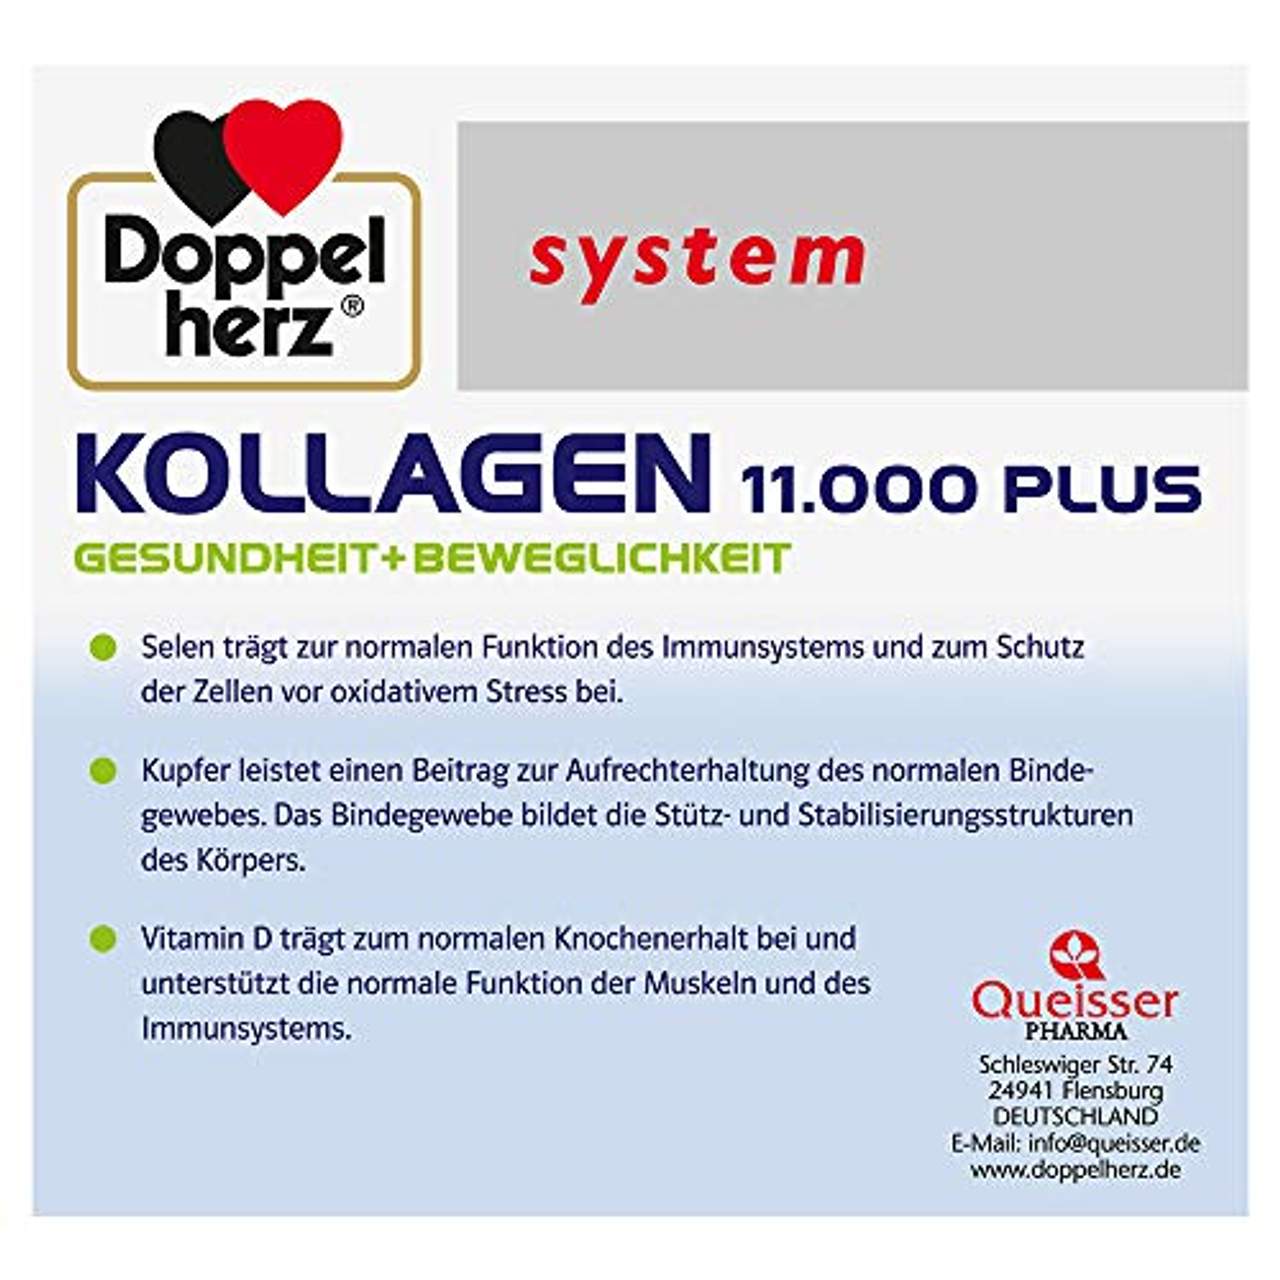 Doppelherz system Kollagen 11.000 Plus